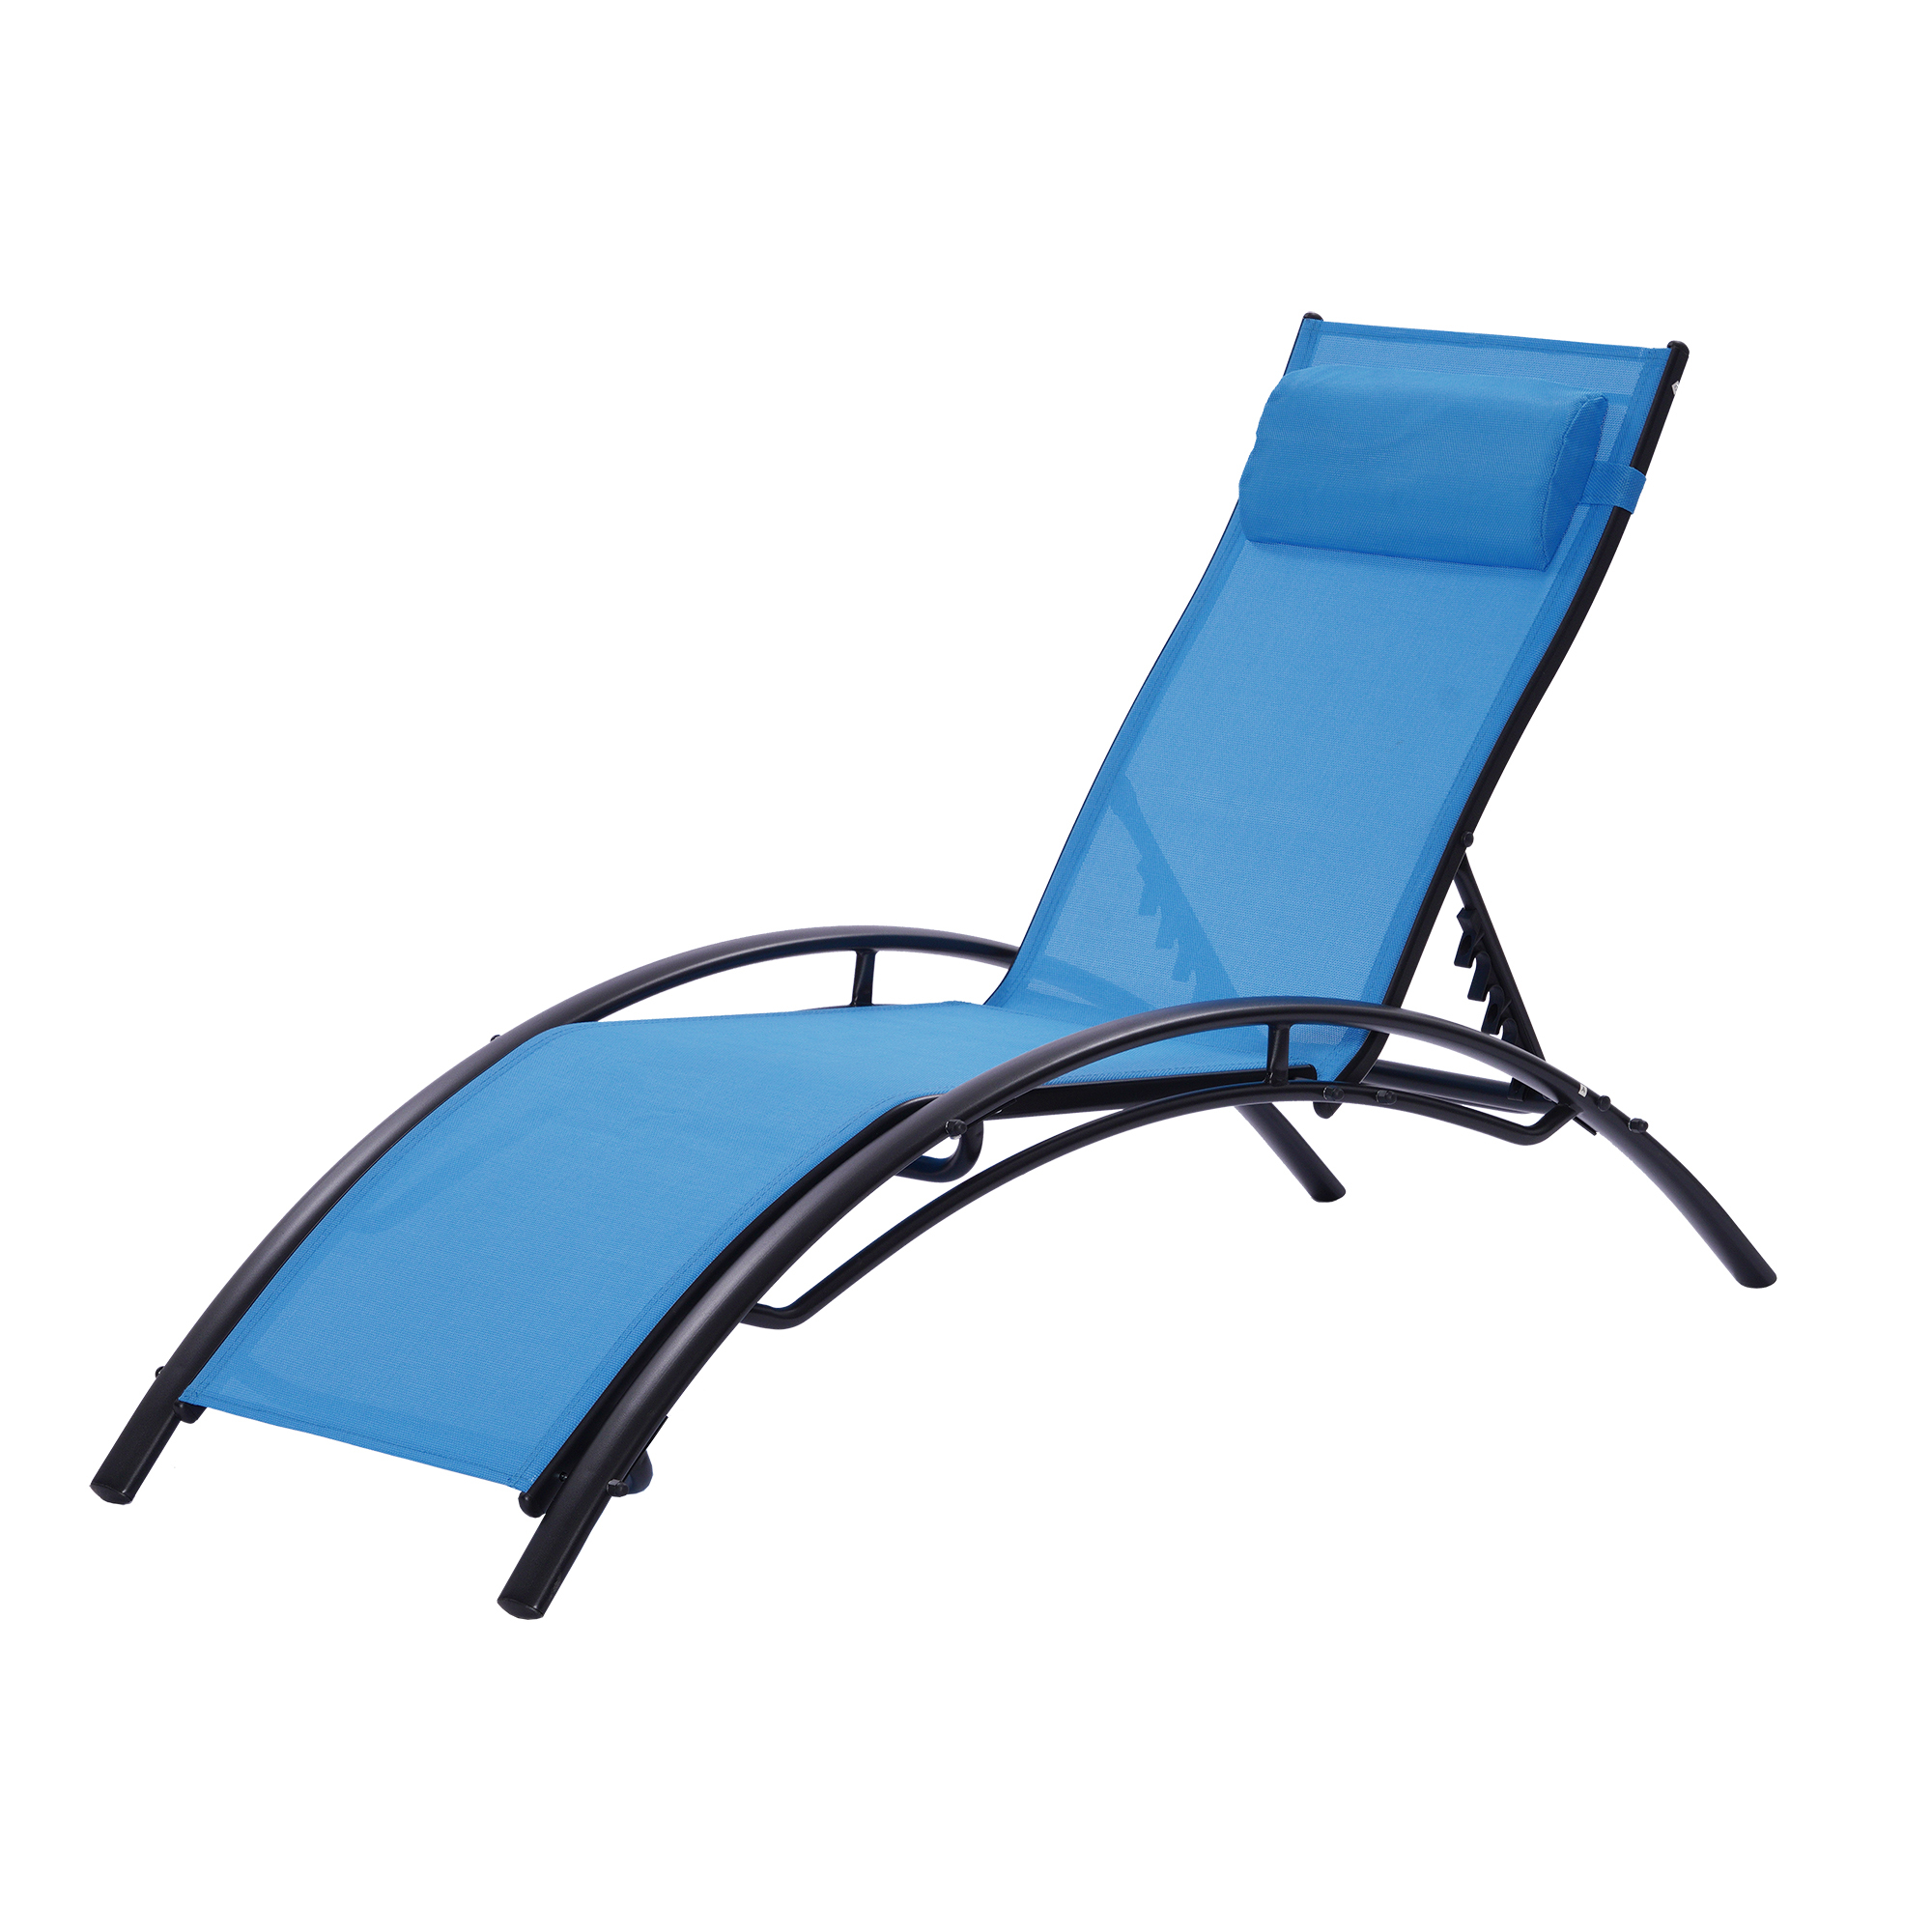 Hassch 2PCS Outdoor Chaise Lounges Aluminum Recliner Chair Beach Sun Chair, Blue - image 3 of 10